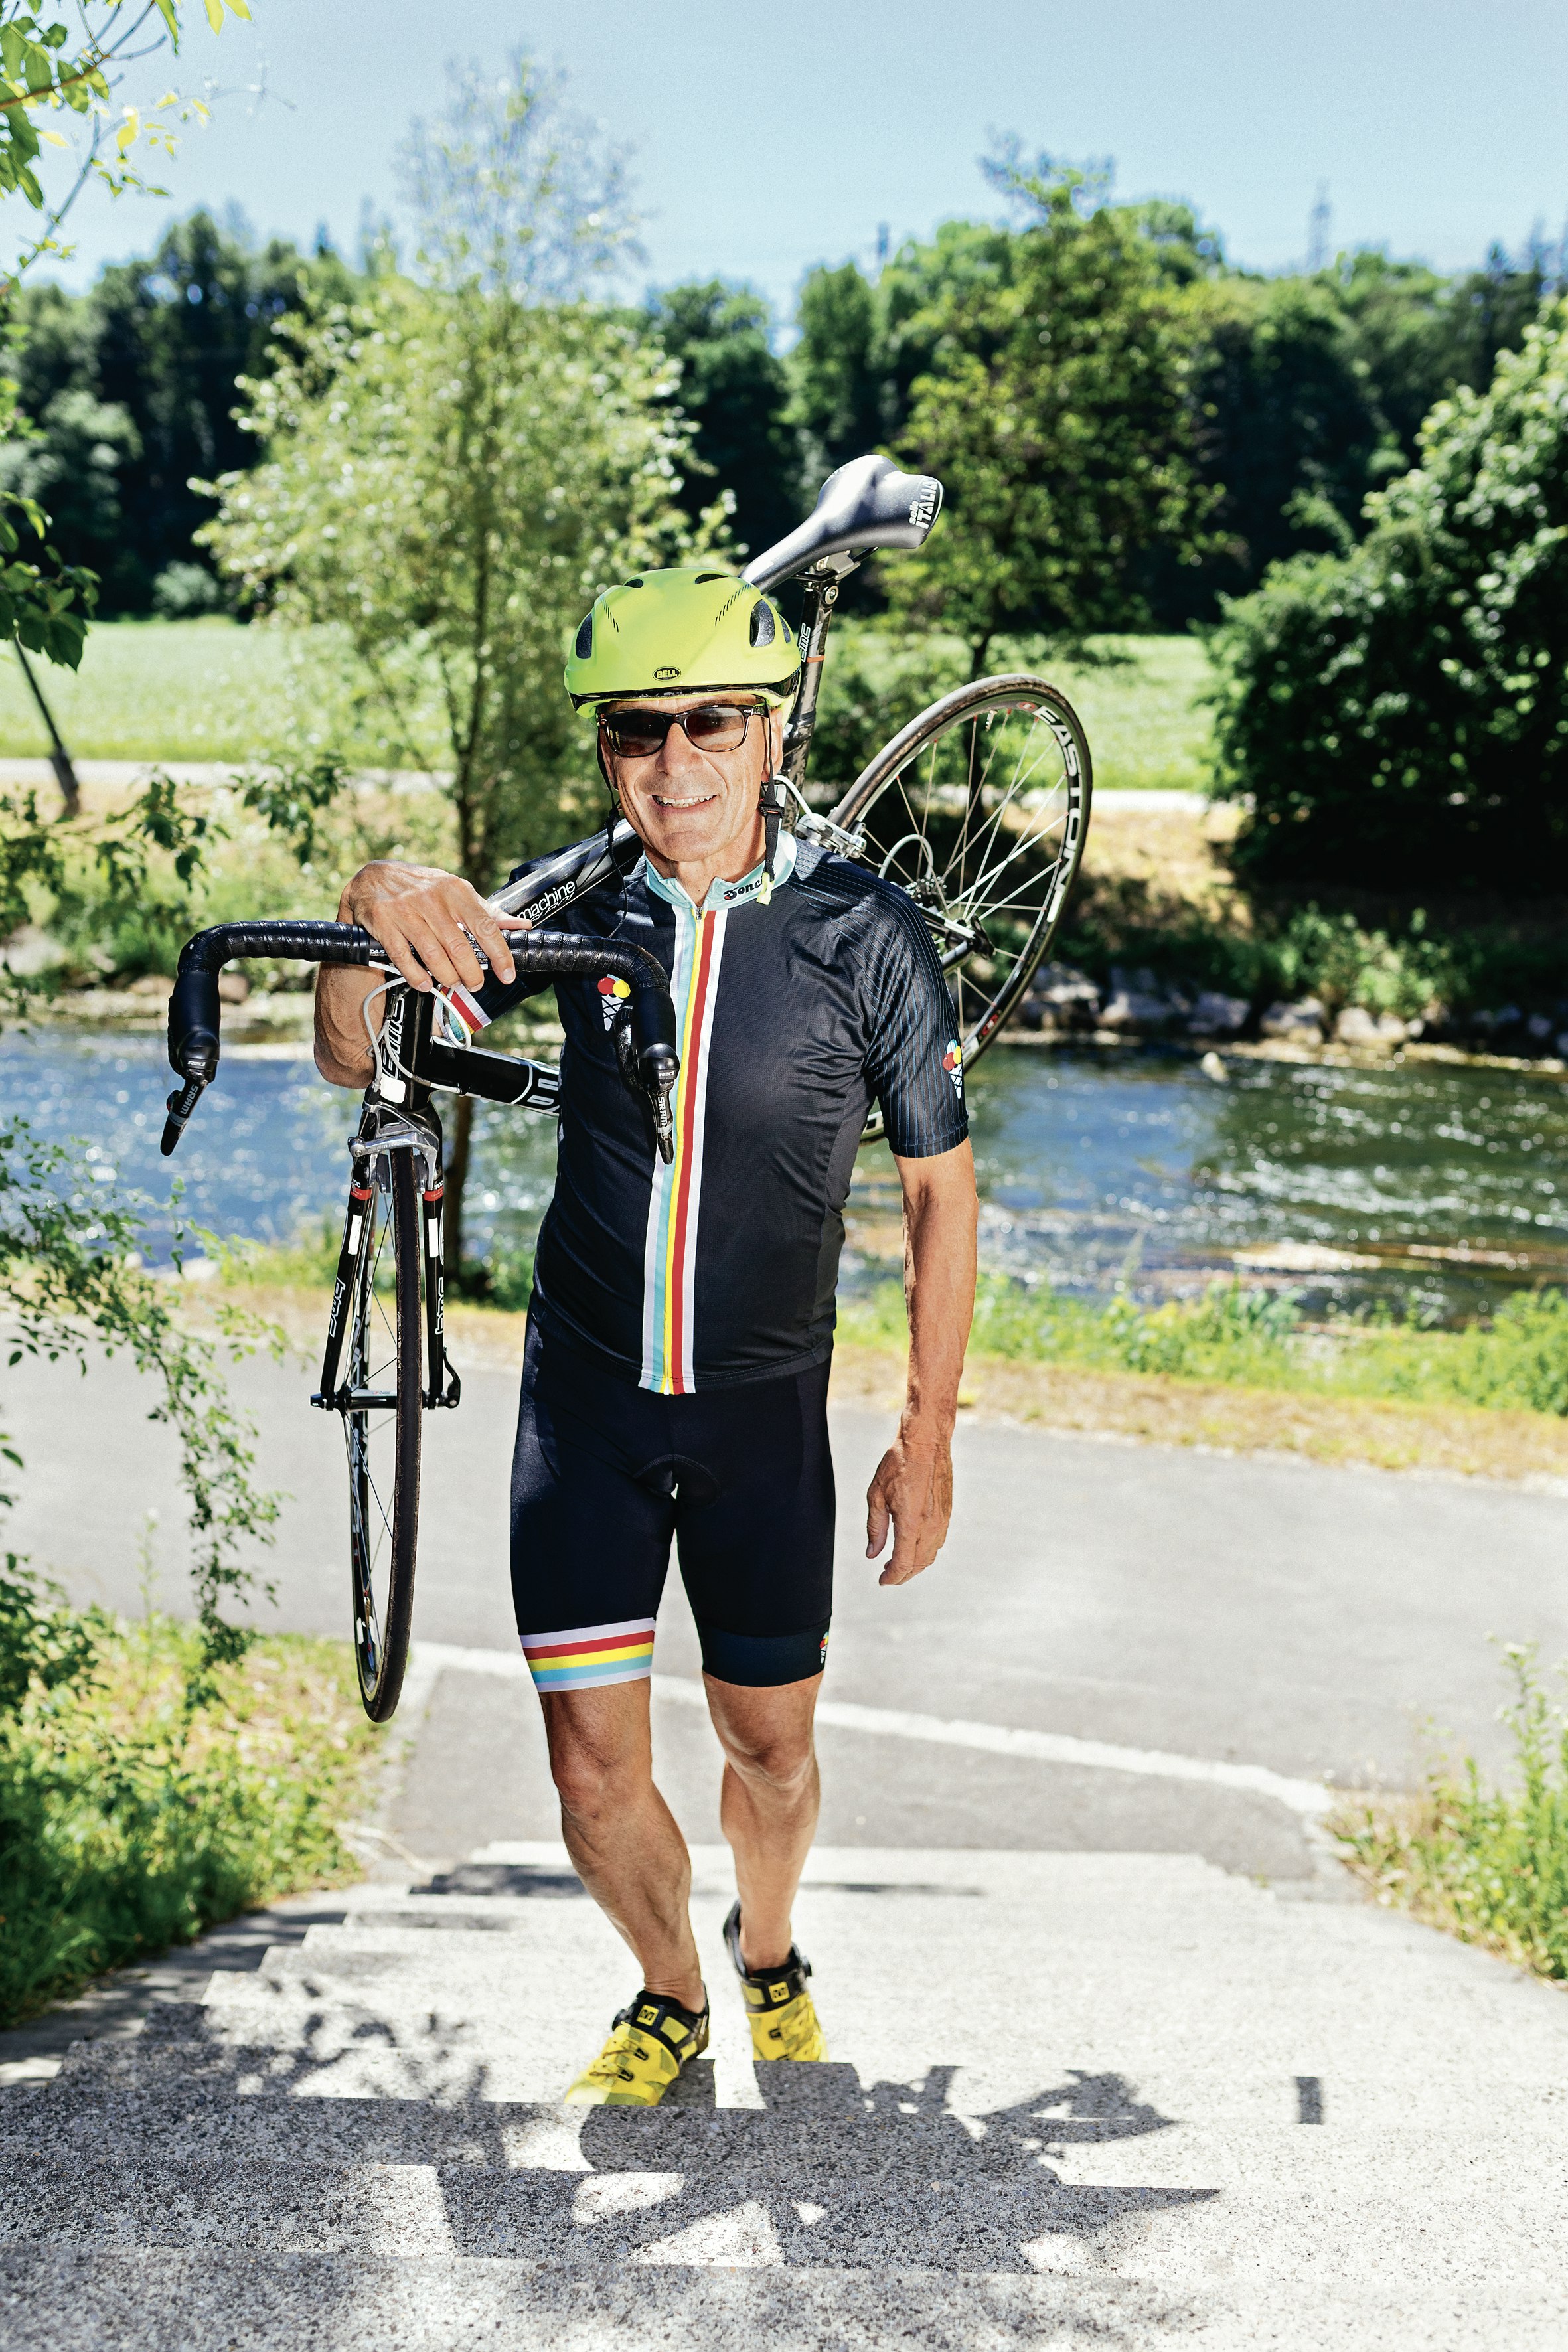 Biketour mit Hans-Ulrich Lehmann